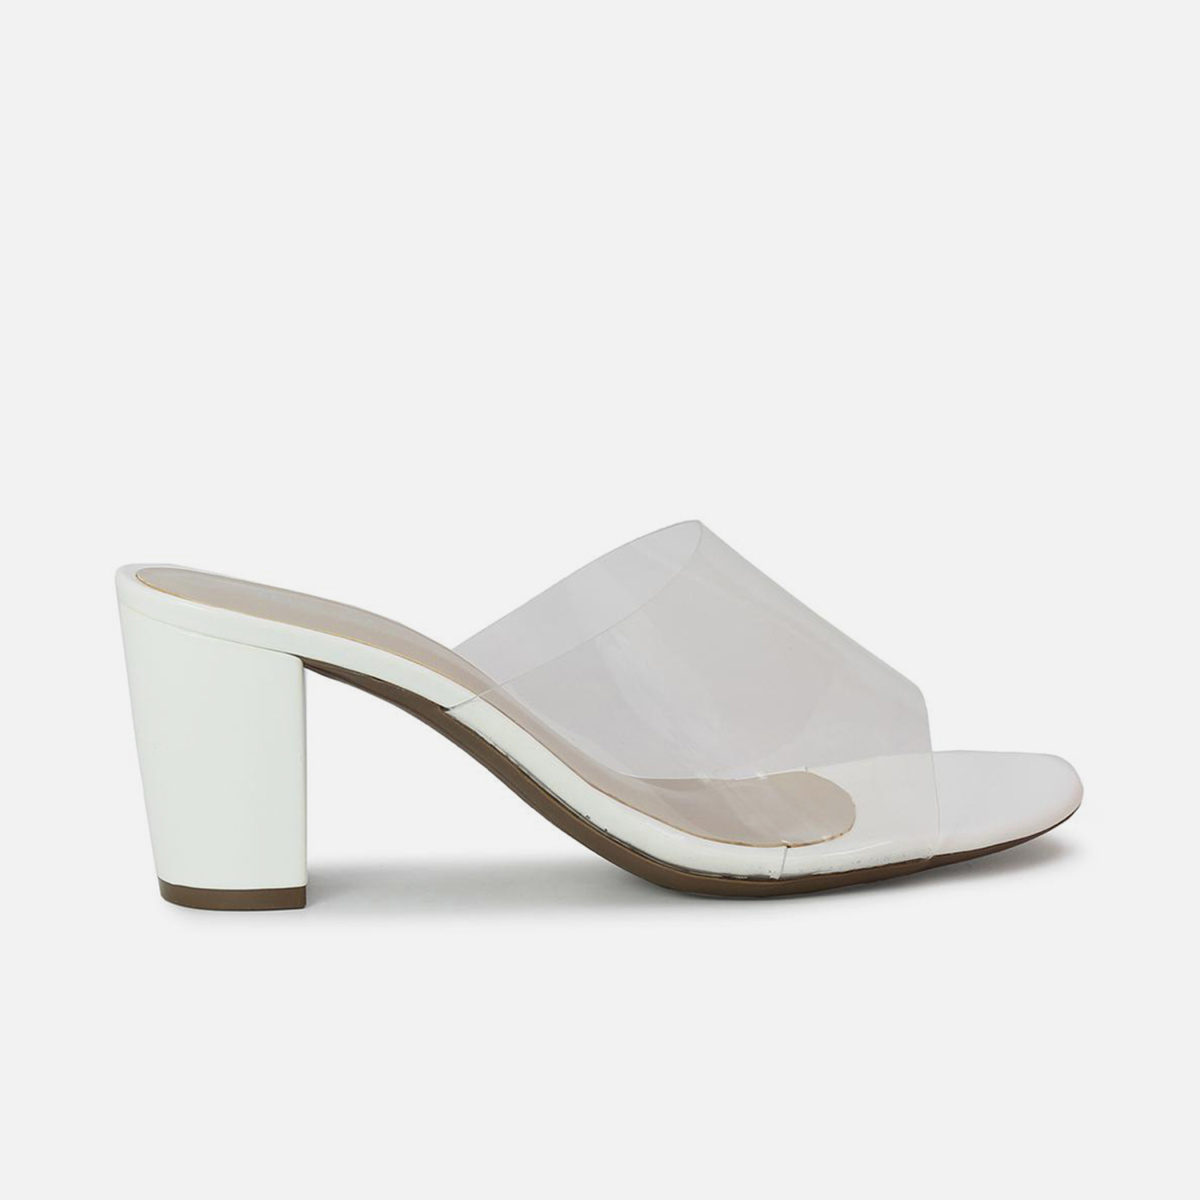 Buy Inc.5 High Heel Fashion Sandal White Heels Online